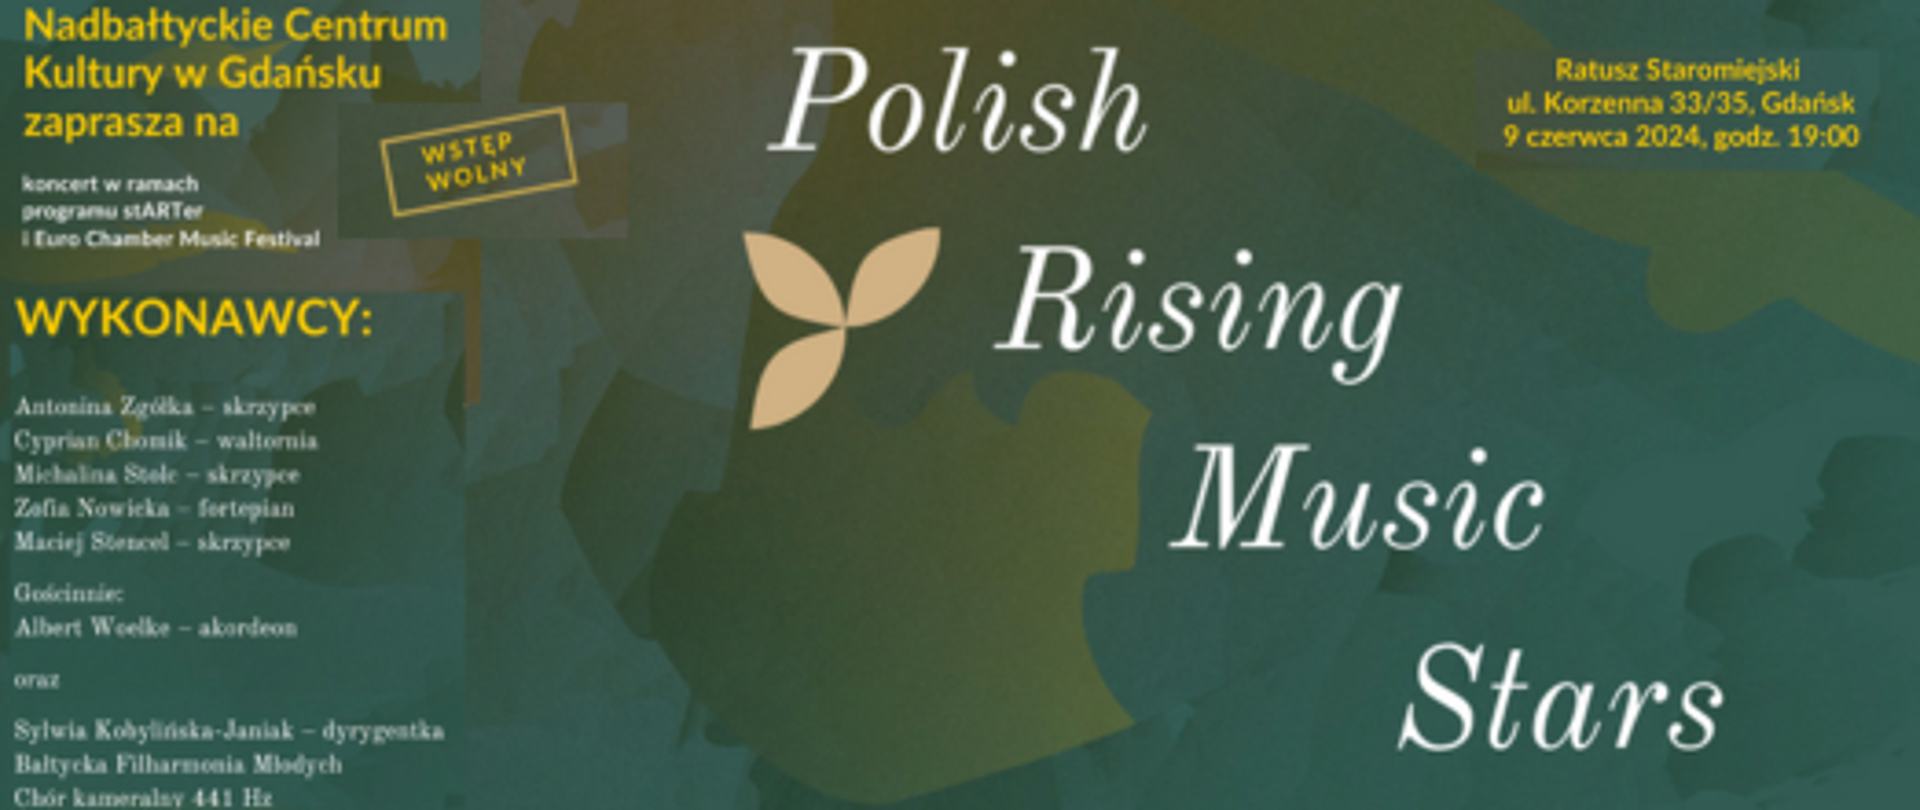 plakat informacyjny o imprezie Polish Rising Music Stars